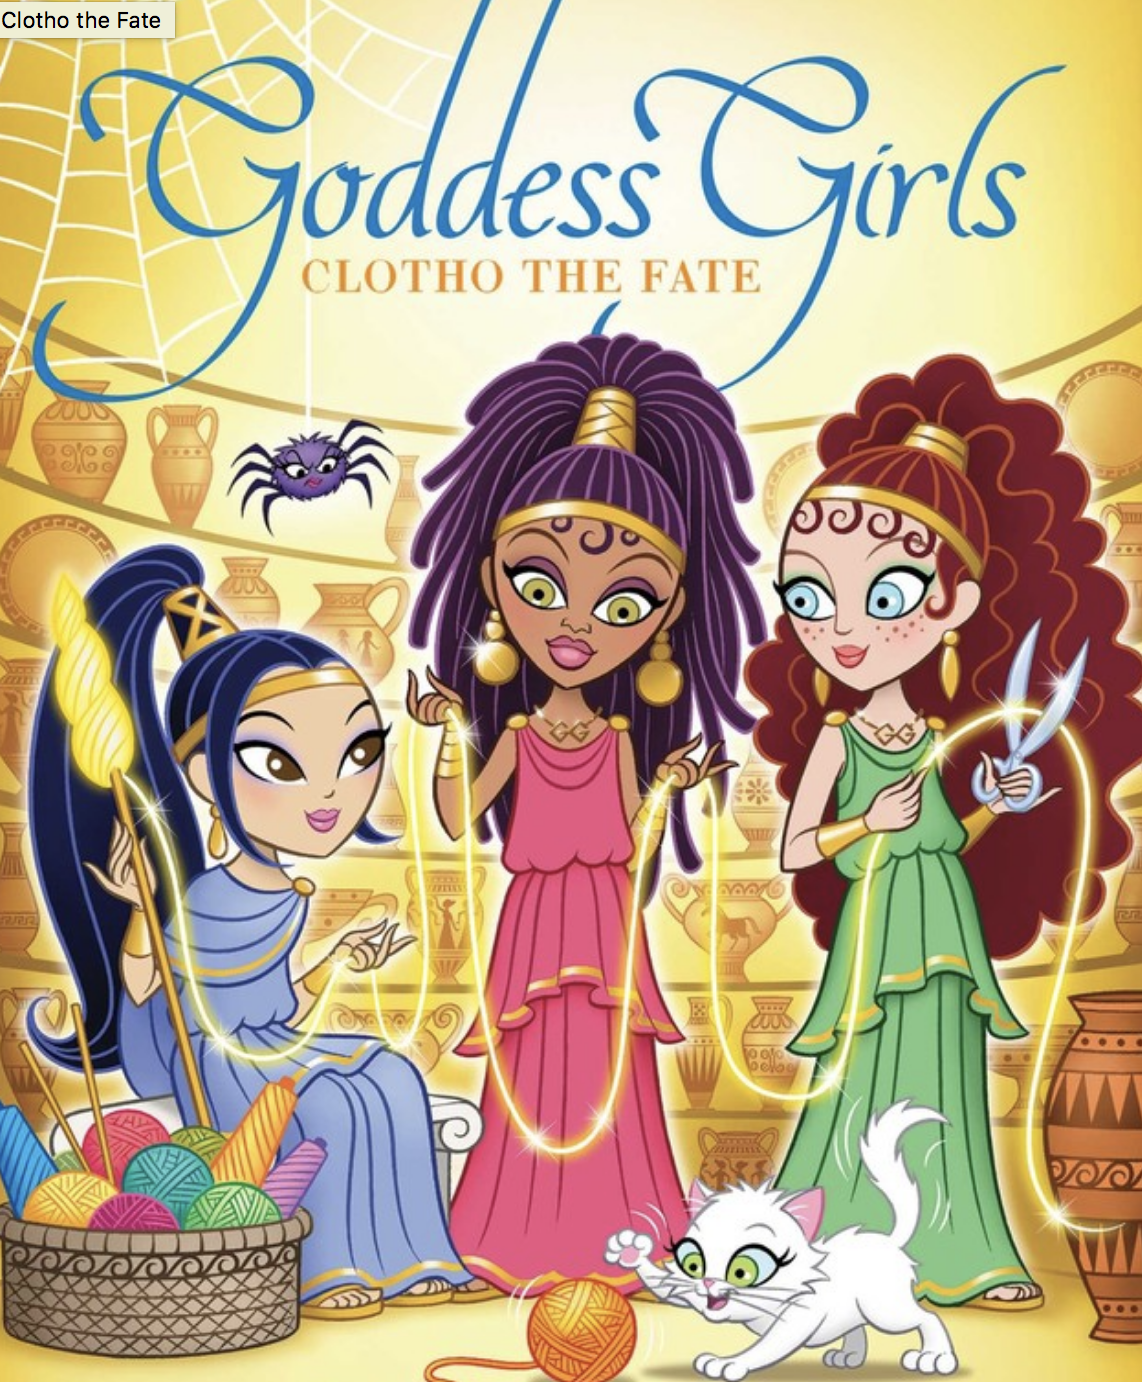 Goddess Girls, Greek mythology with a twist, ages 8-12